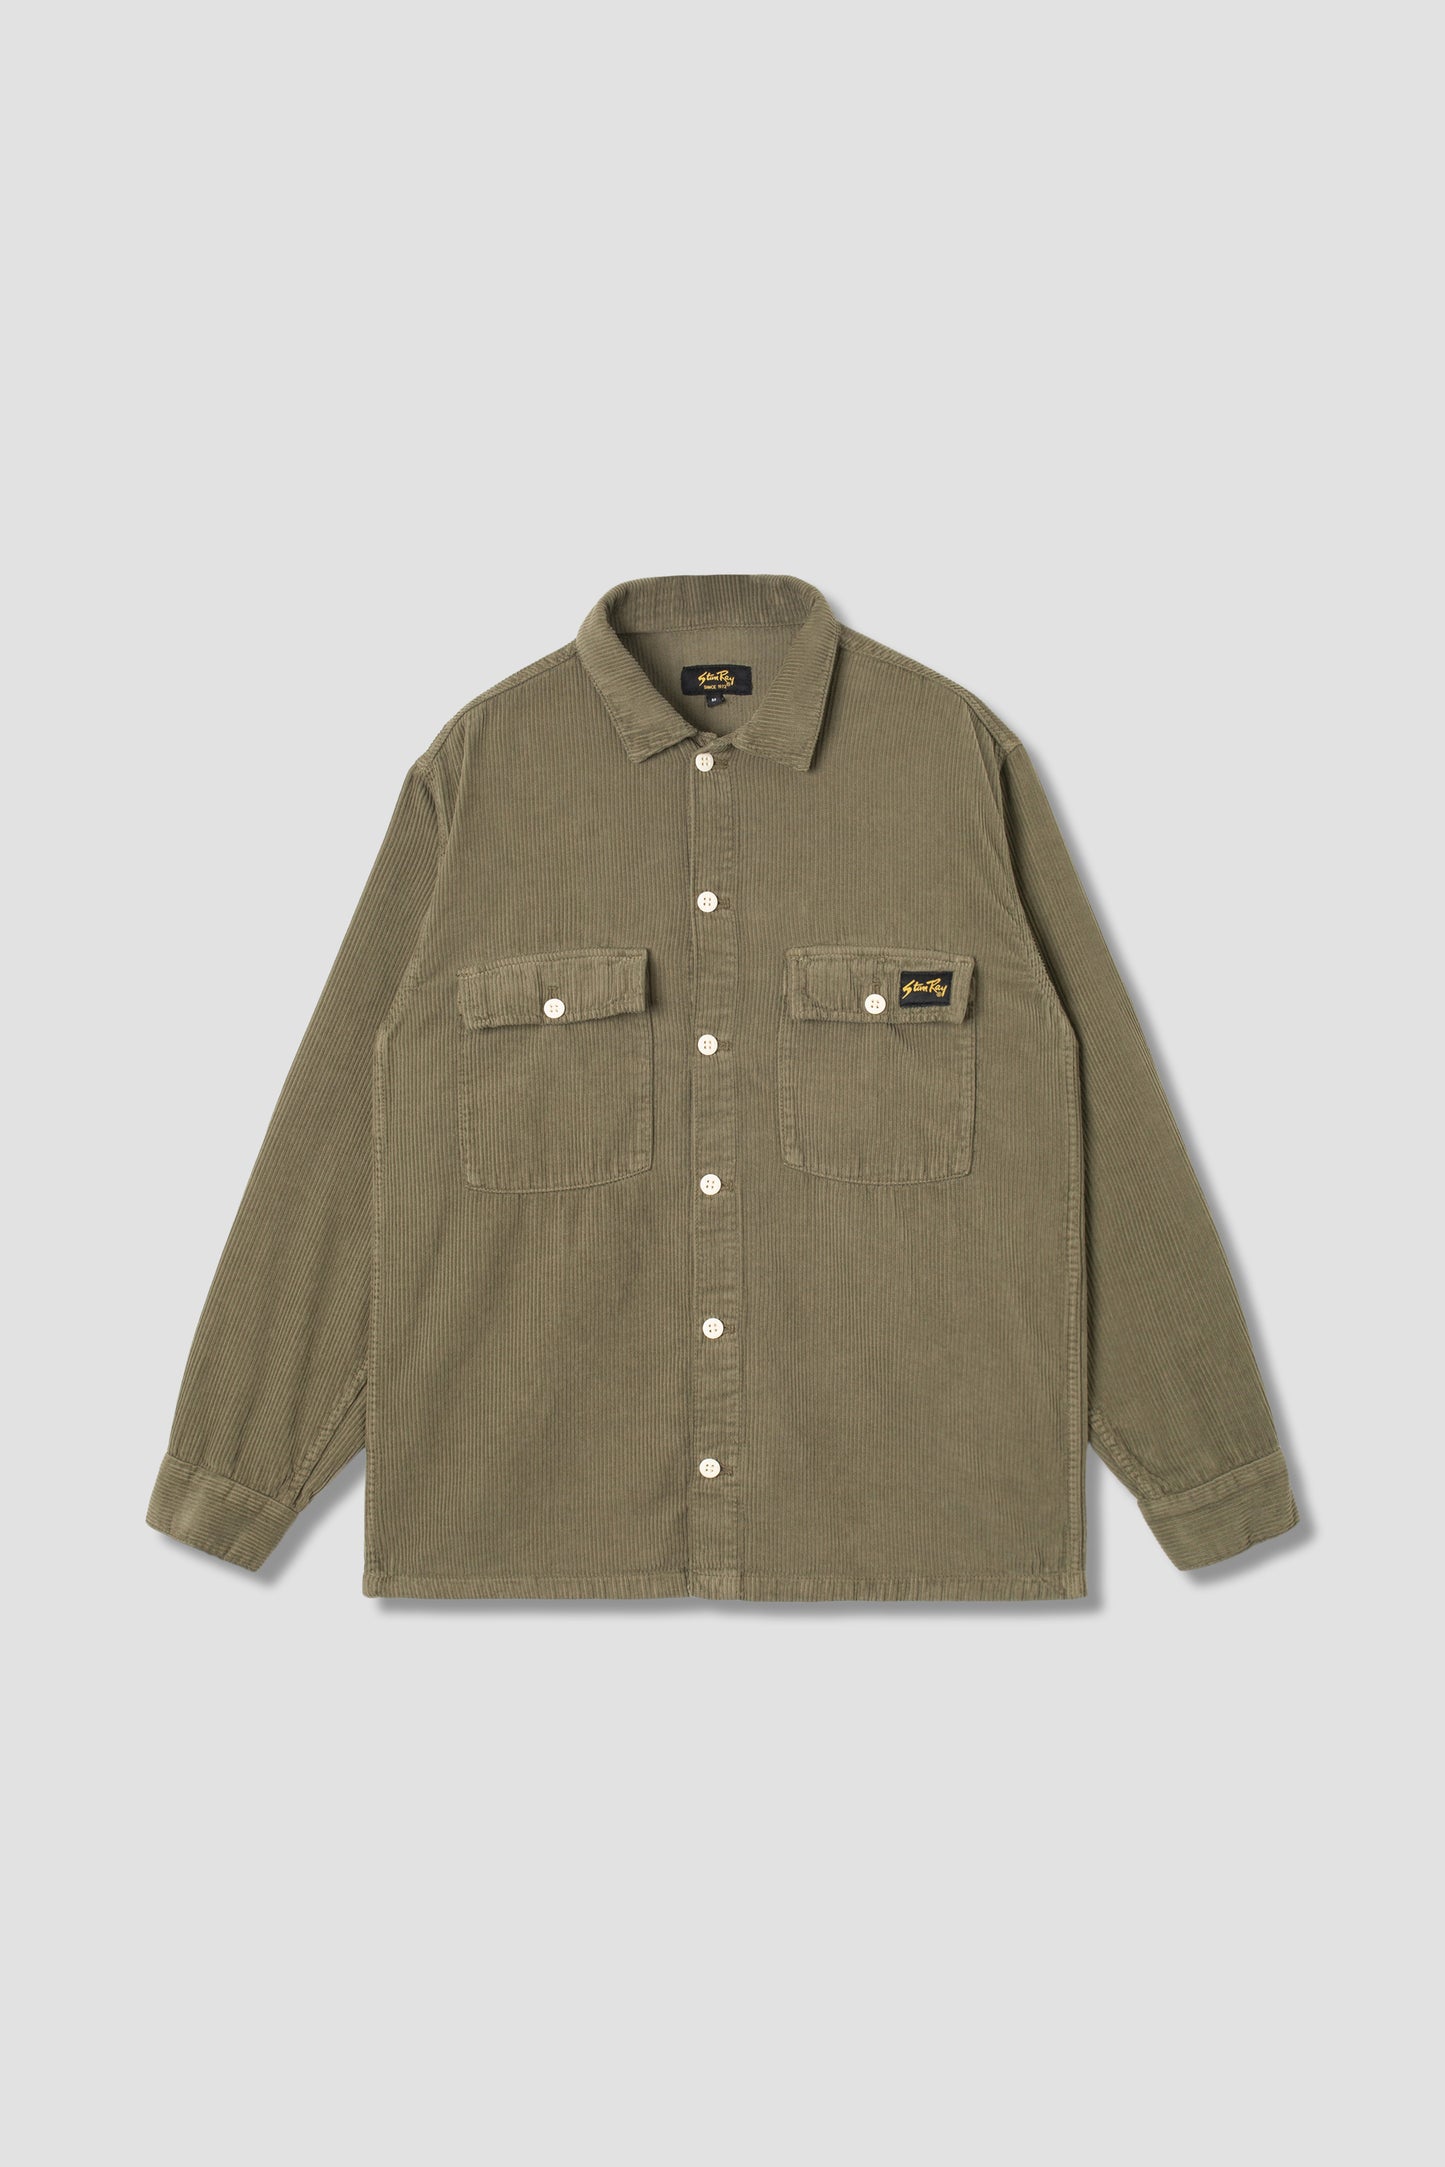 CPO Shirt - Olive cord